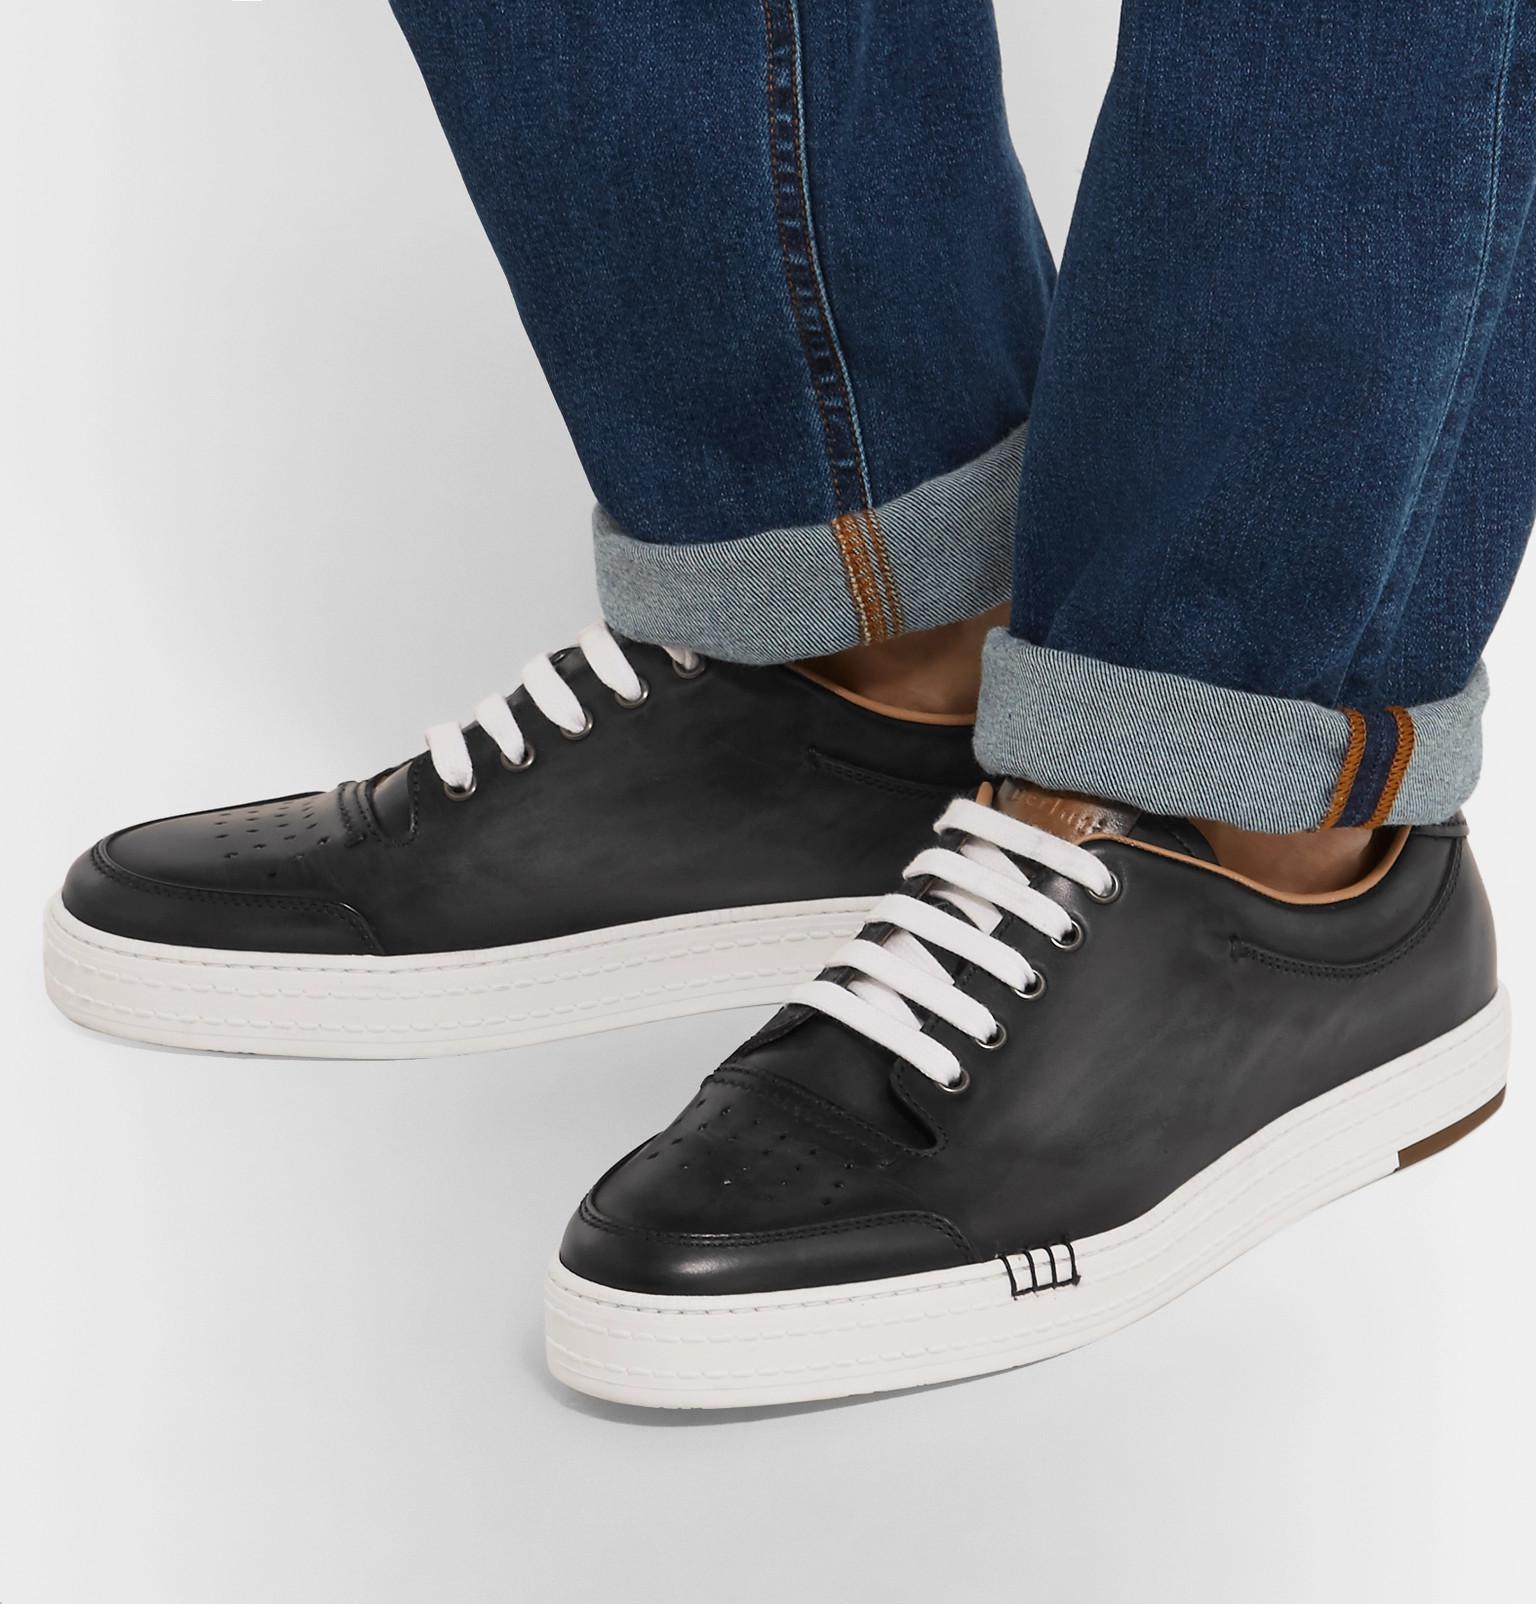 Berluti Playtime Leather Sneakers in Black for Men - Lyst